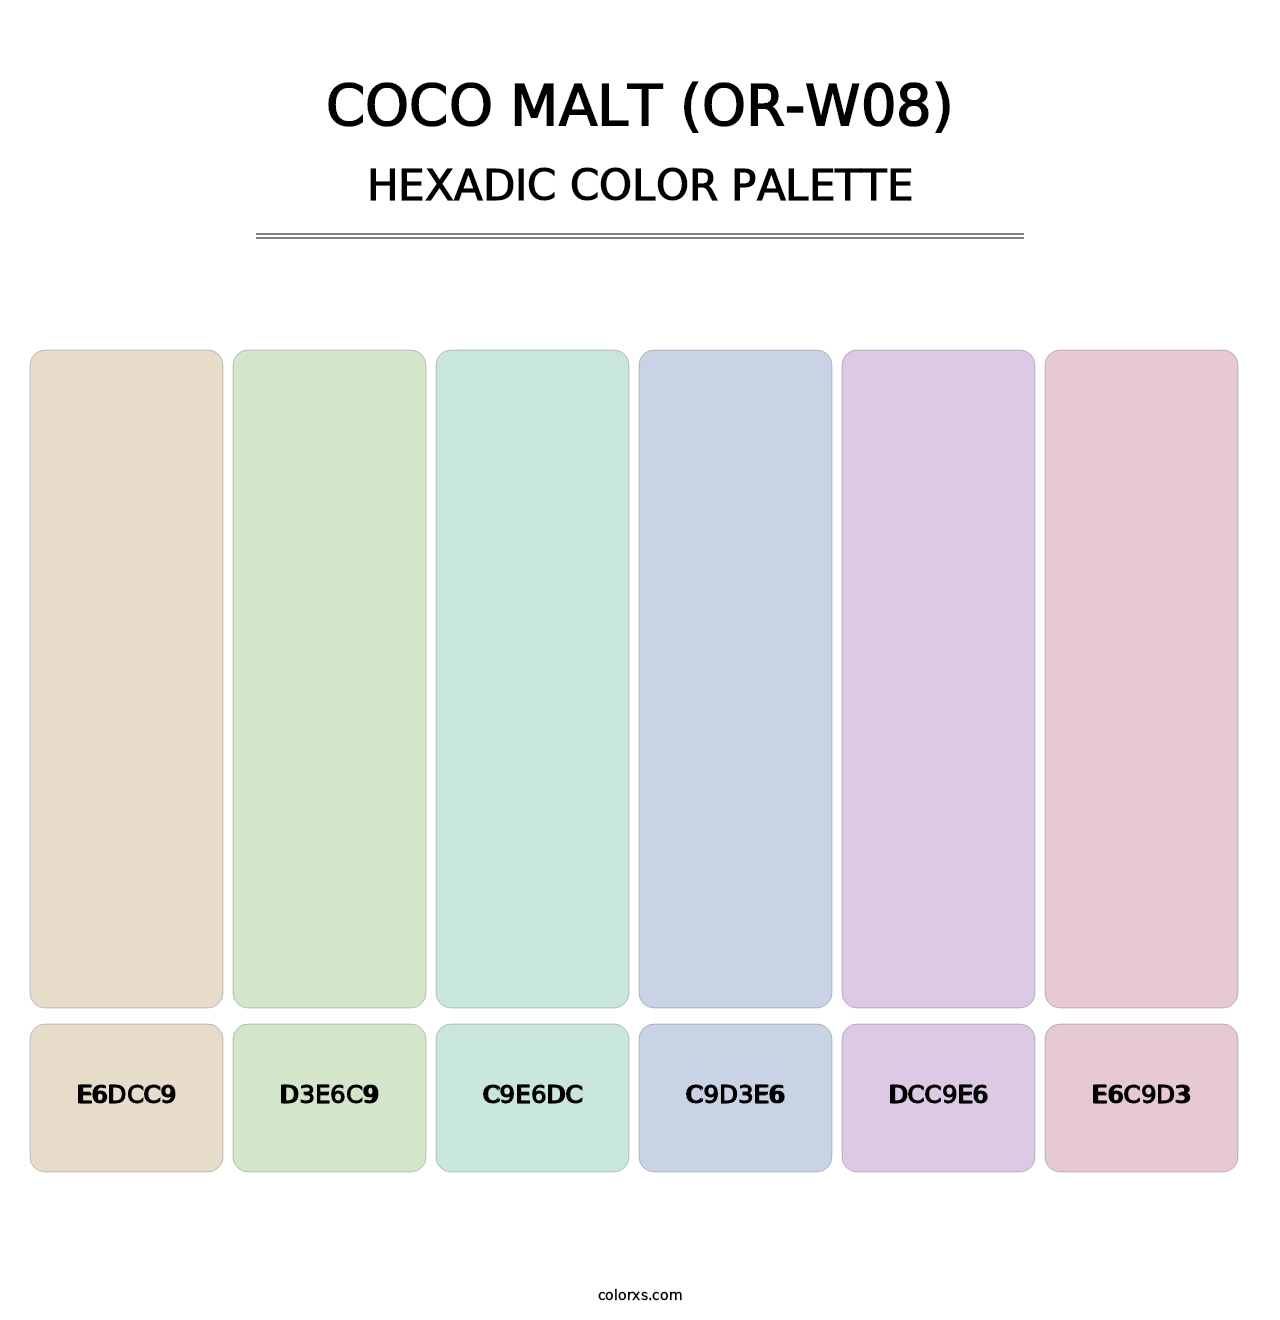 Coco Malt (OR-W08) - Hexadic Color Palette